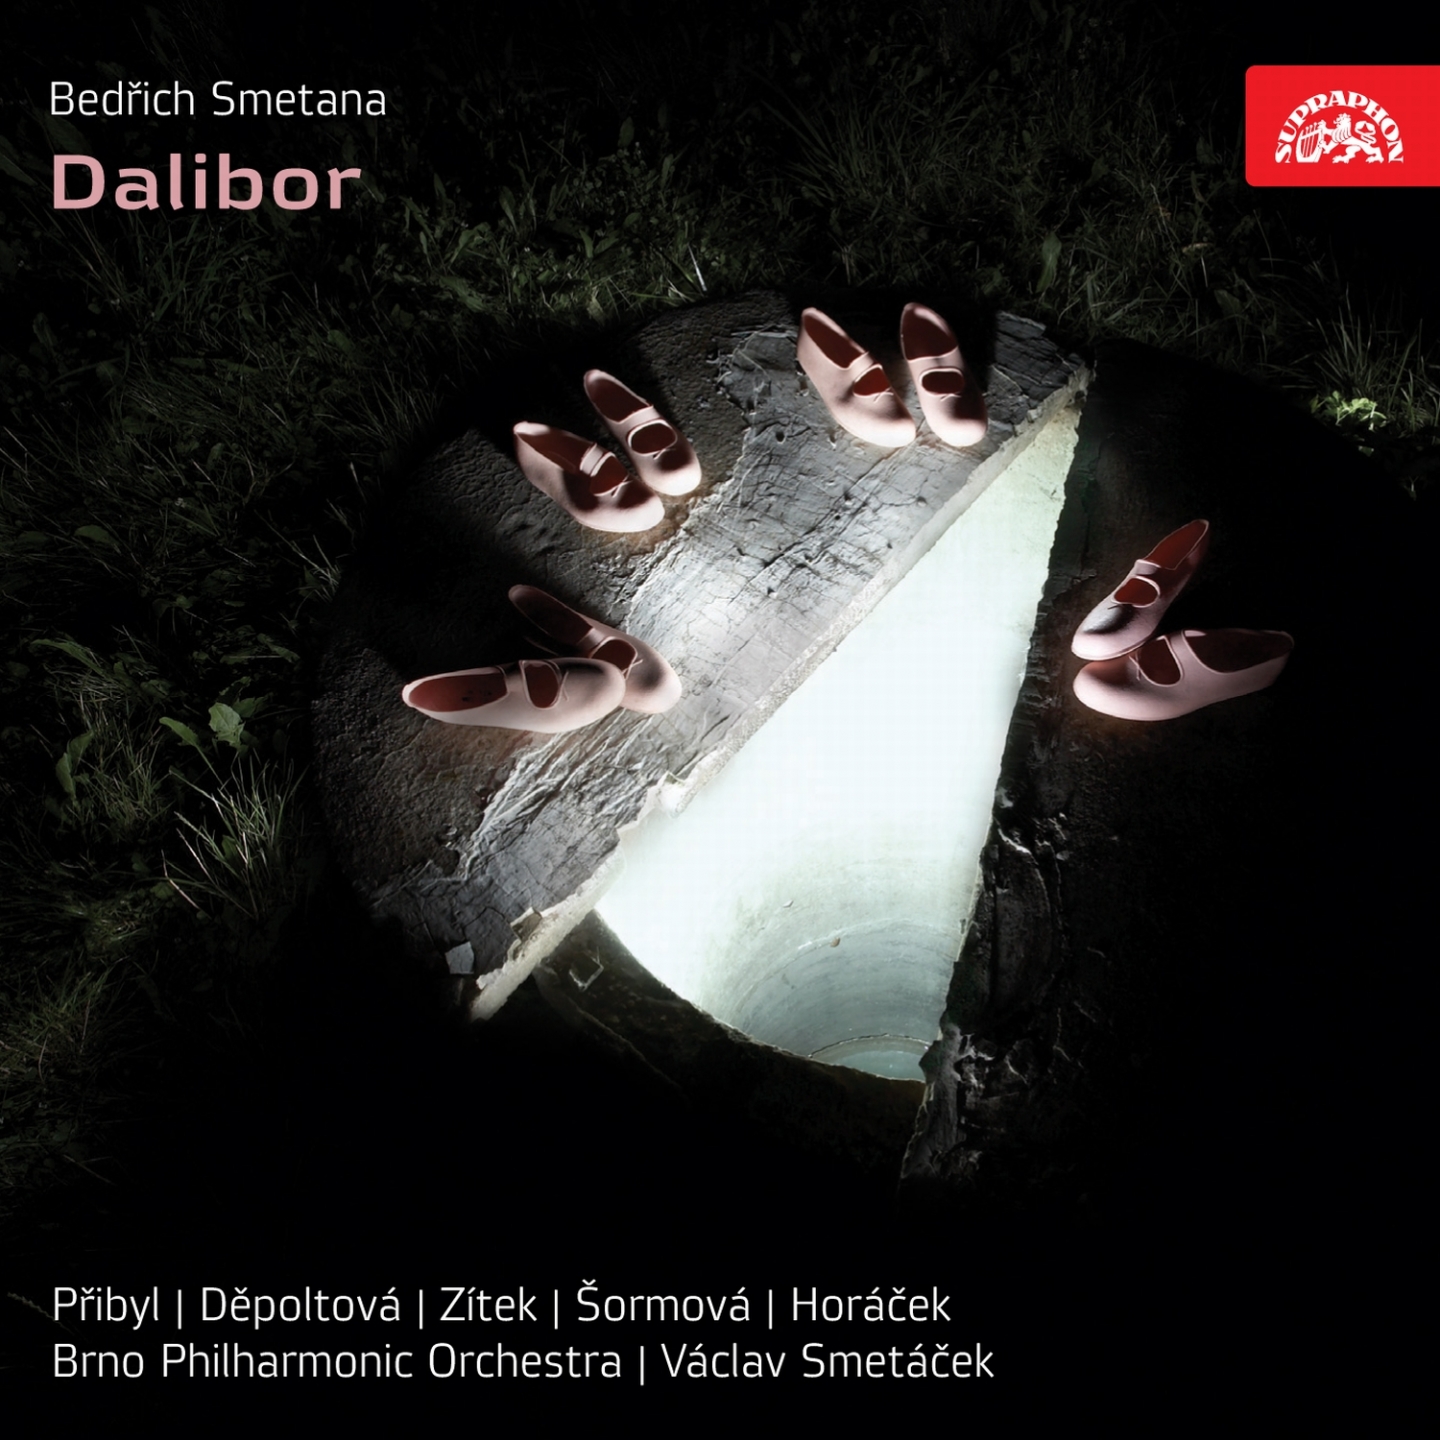 Dalibor, ., Act II: " It Was He Again?" Dalibor, ryti